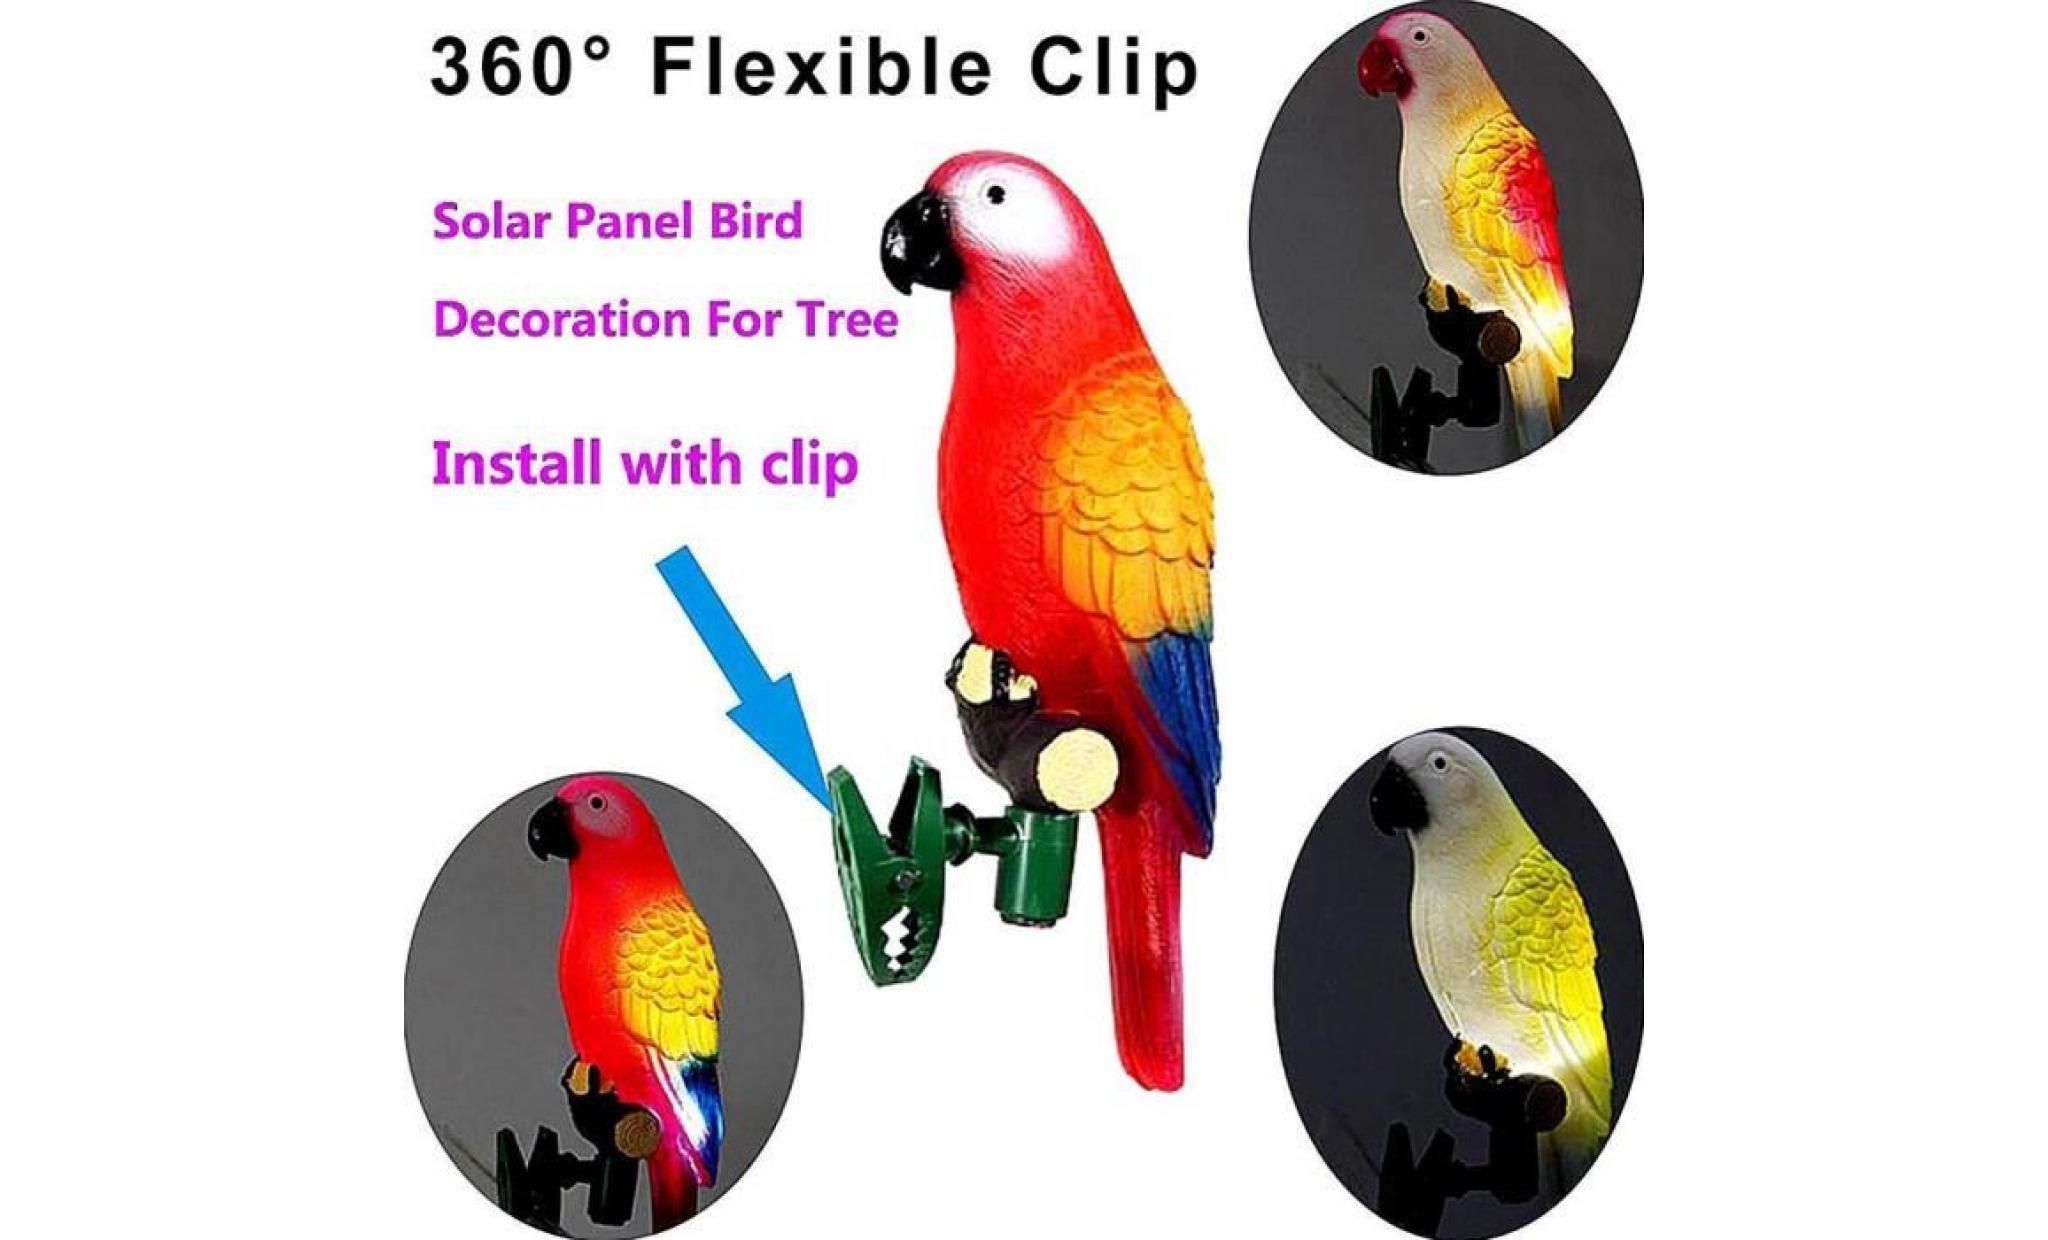 4x veilleuse à del solaire bird parrot light bird #si 53